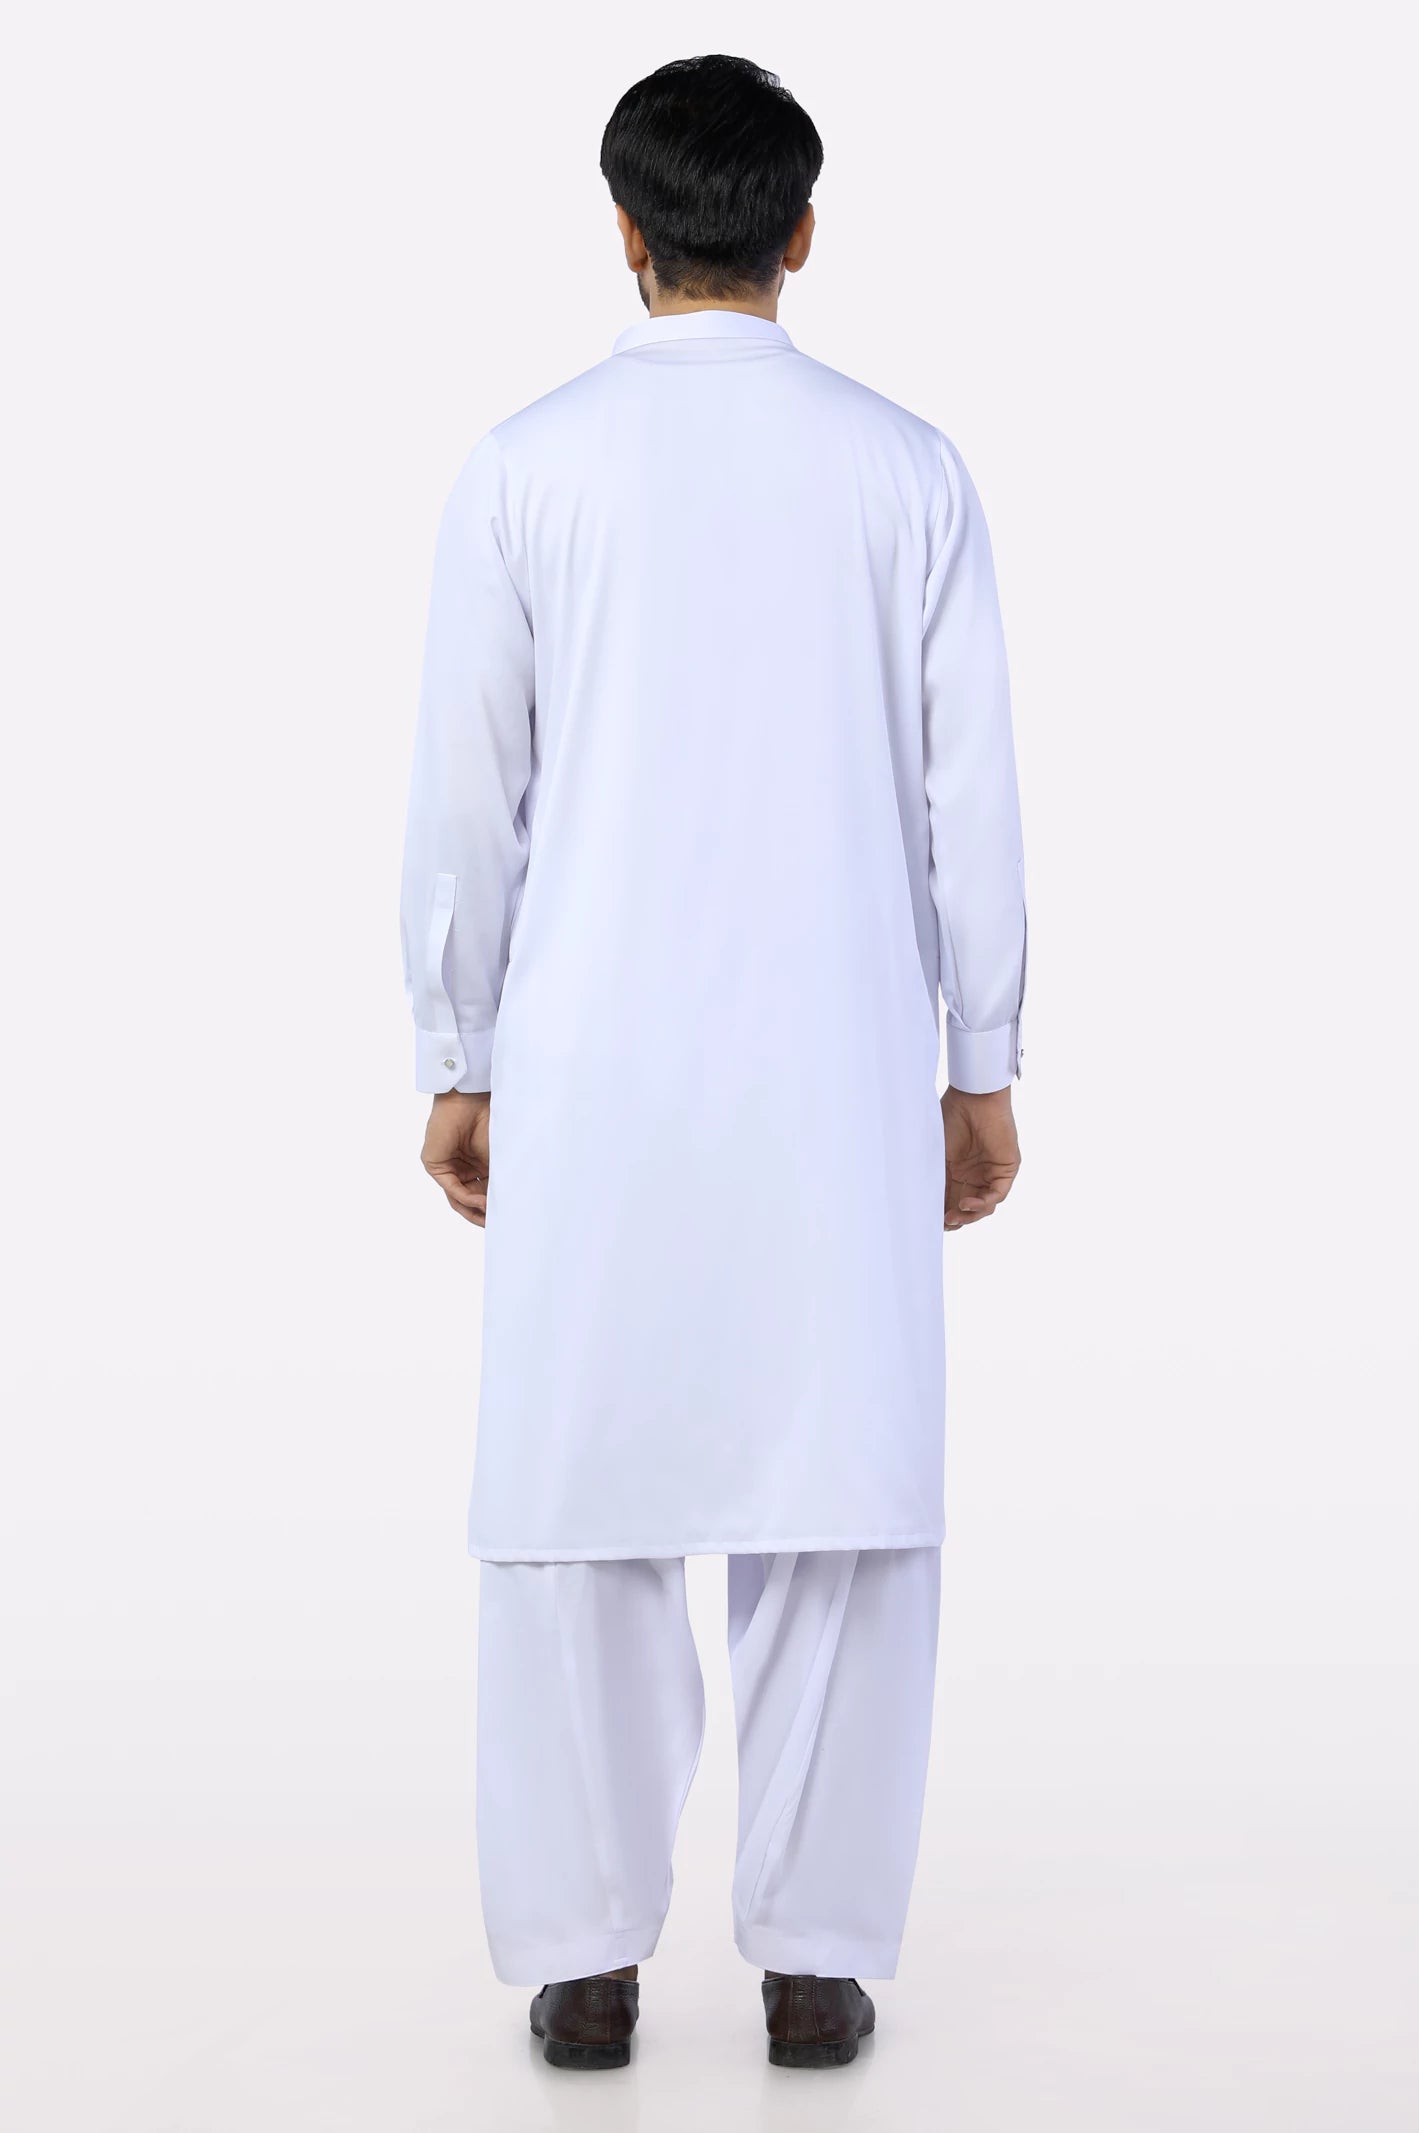 White Wash & Wear Shalwar Kameez From Diners